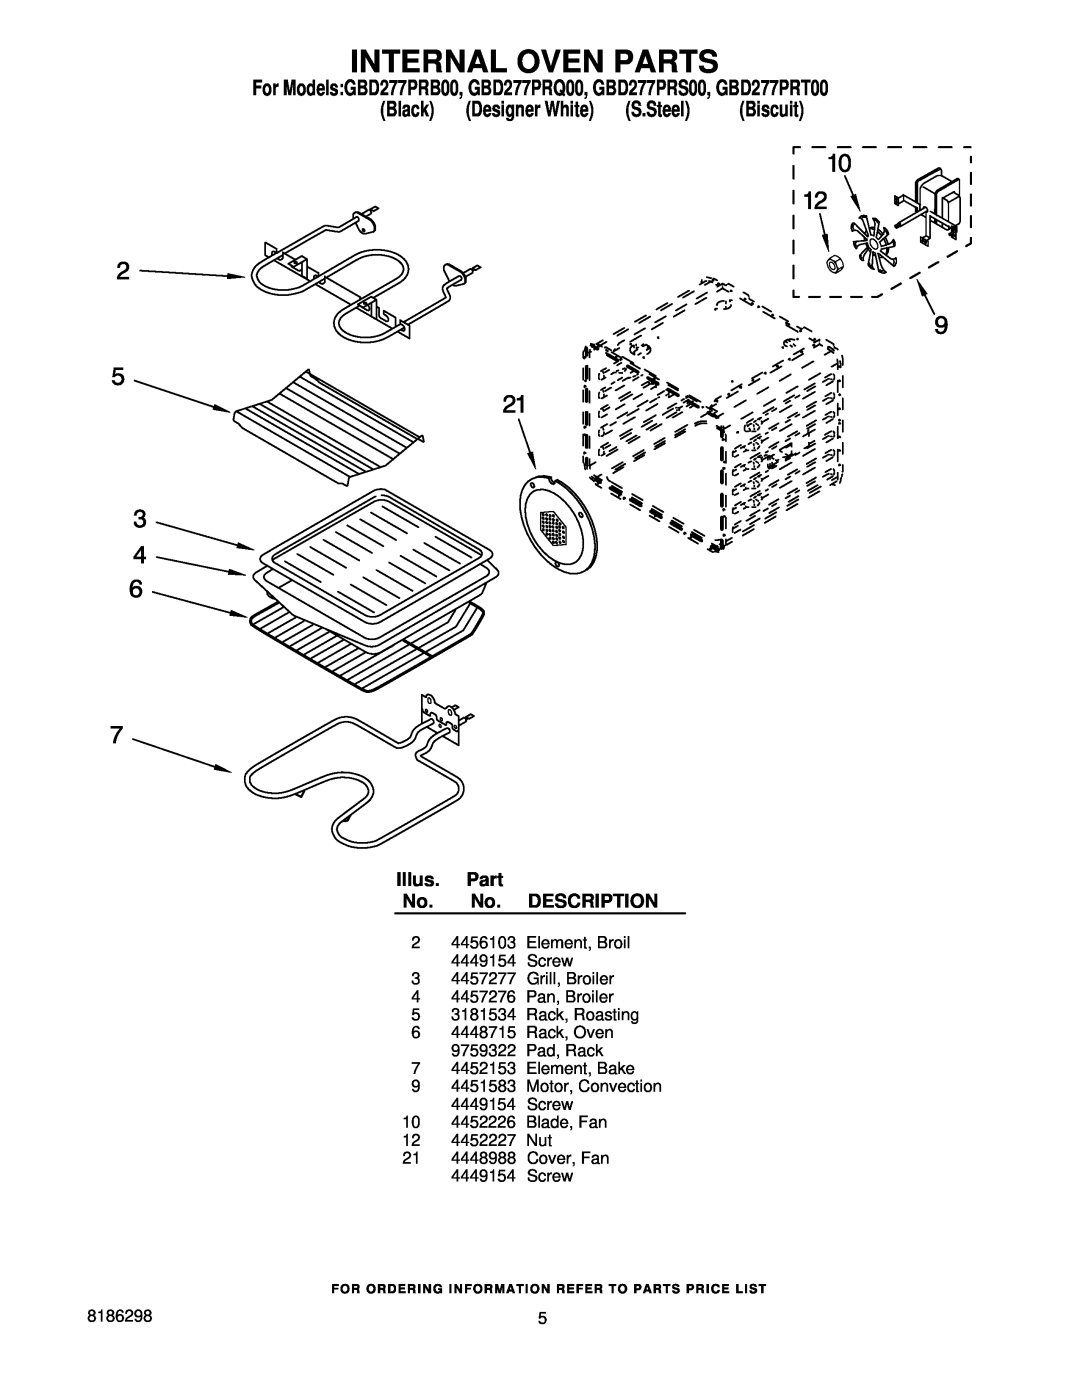 Whirlpool GBD277PR manual Internal Oven Parts, Black Designer White S.Steel Biscuit 